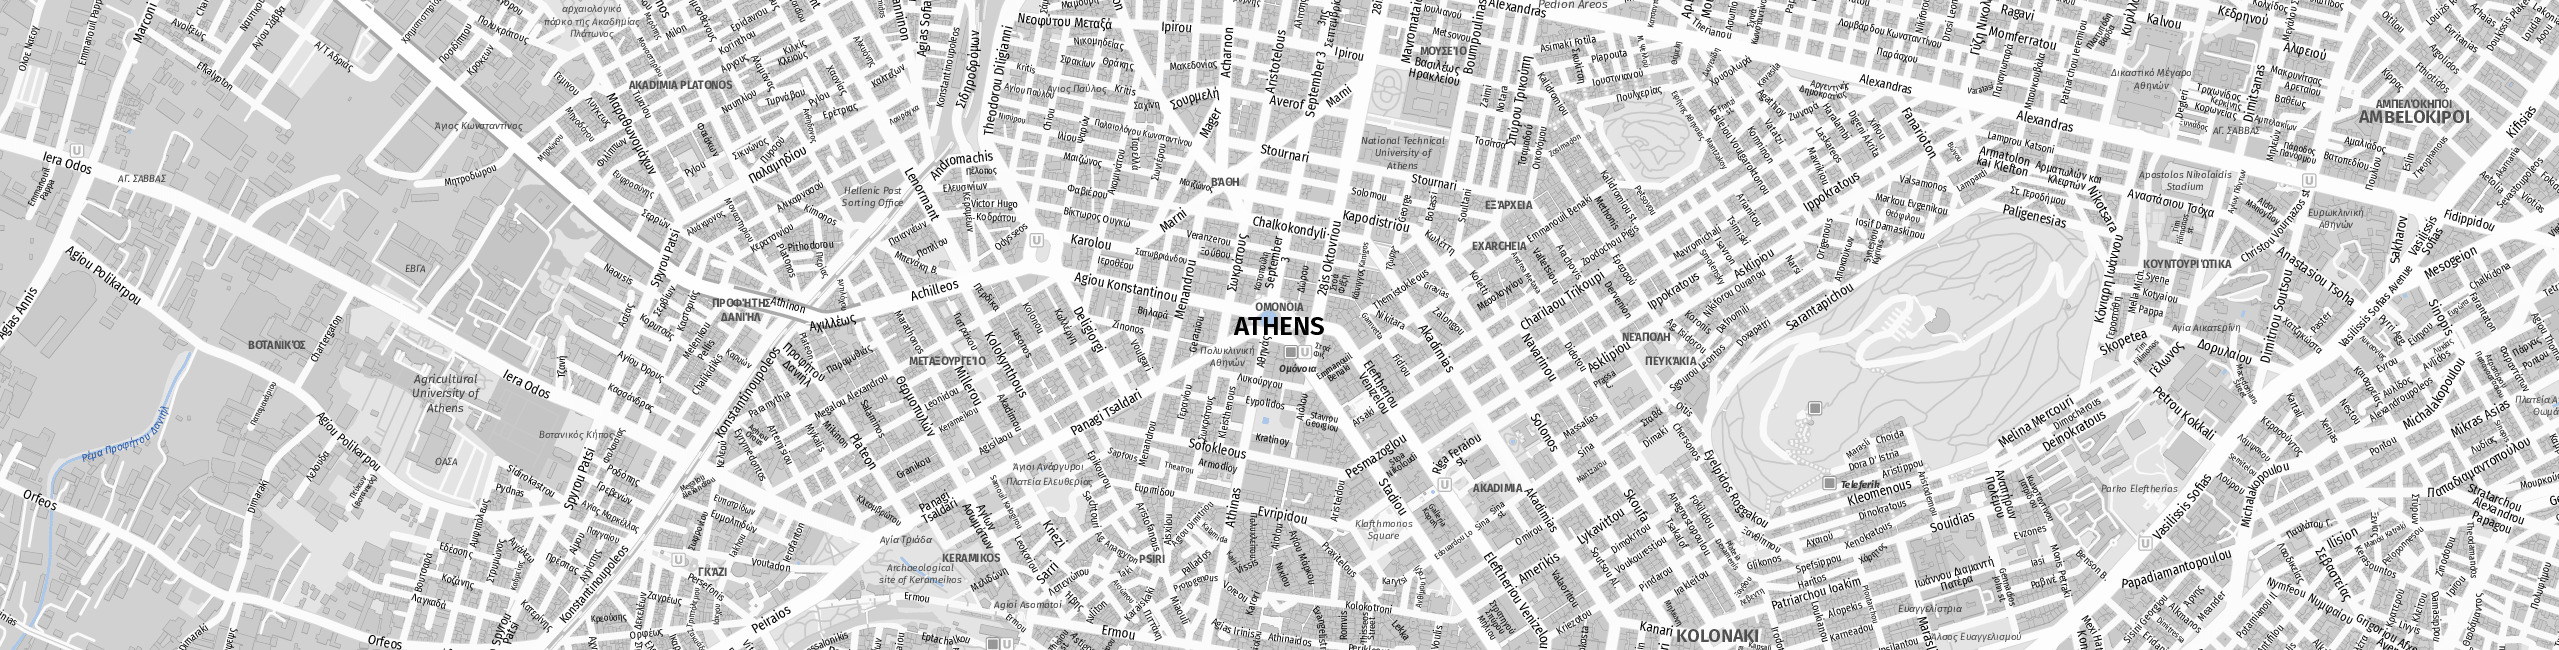 Stadtplan Athen zum Downloaden.